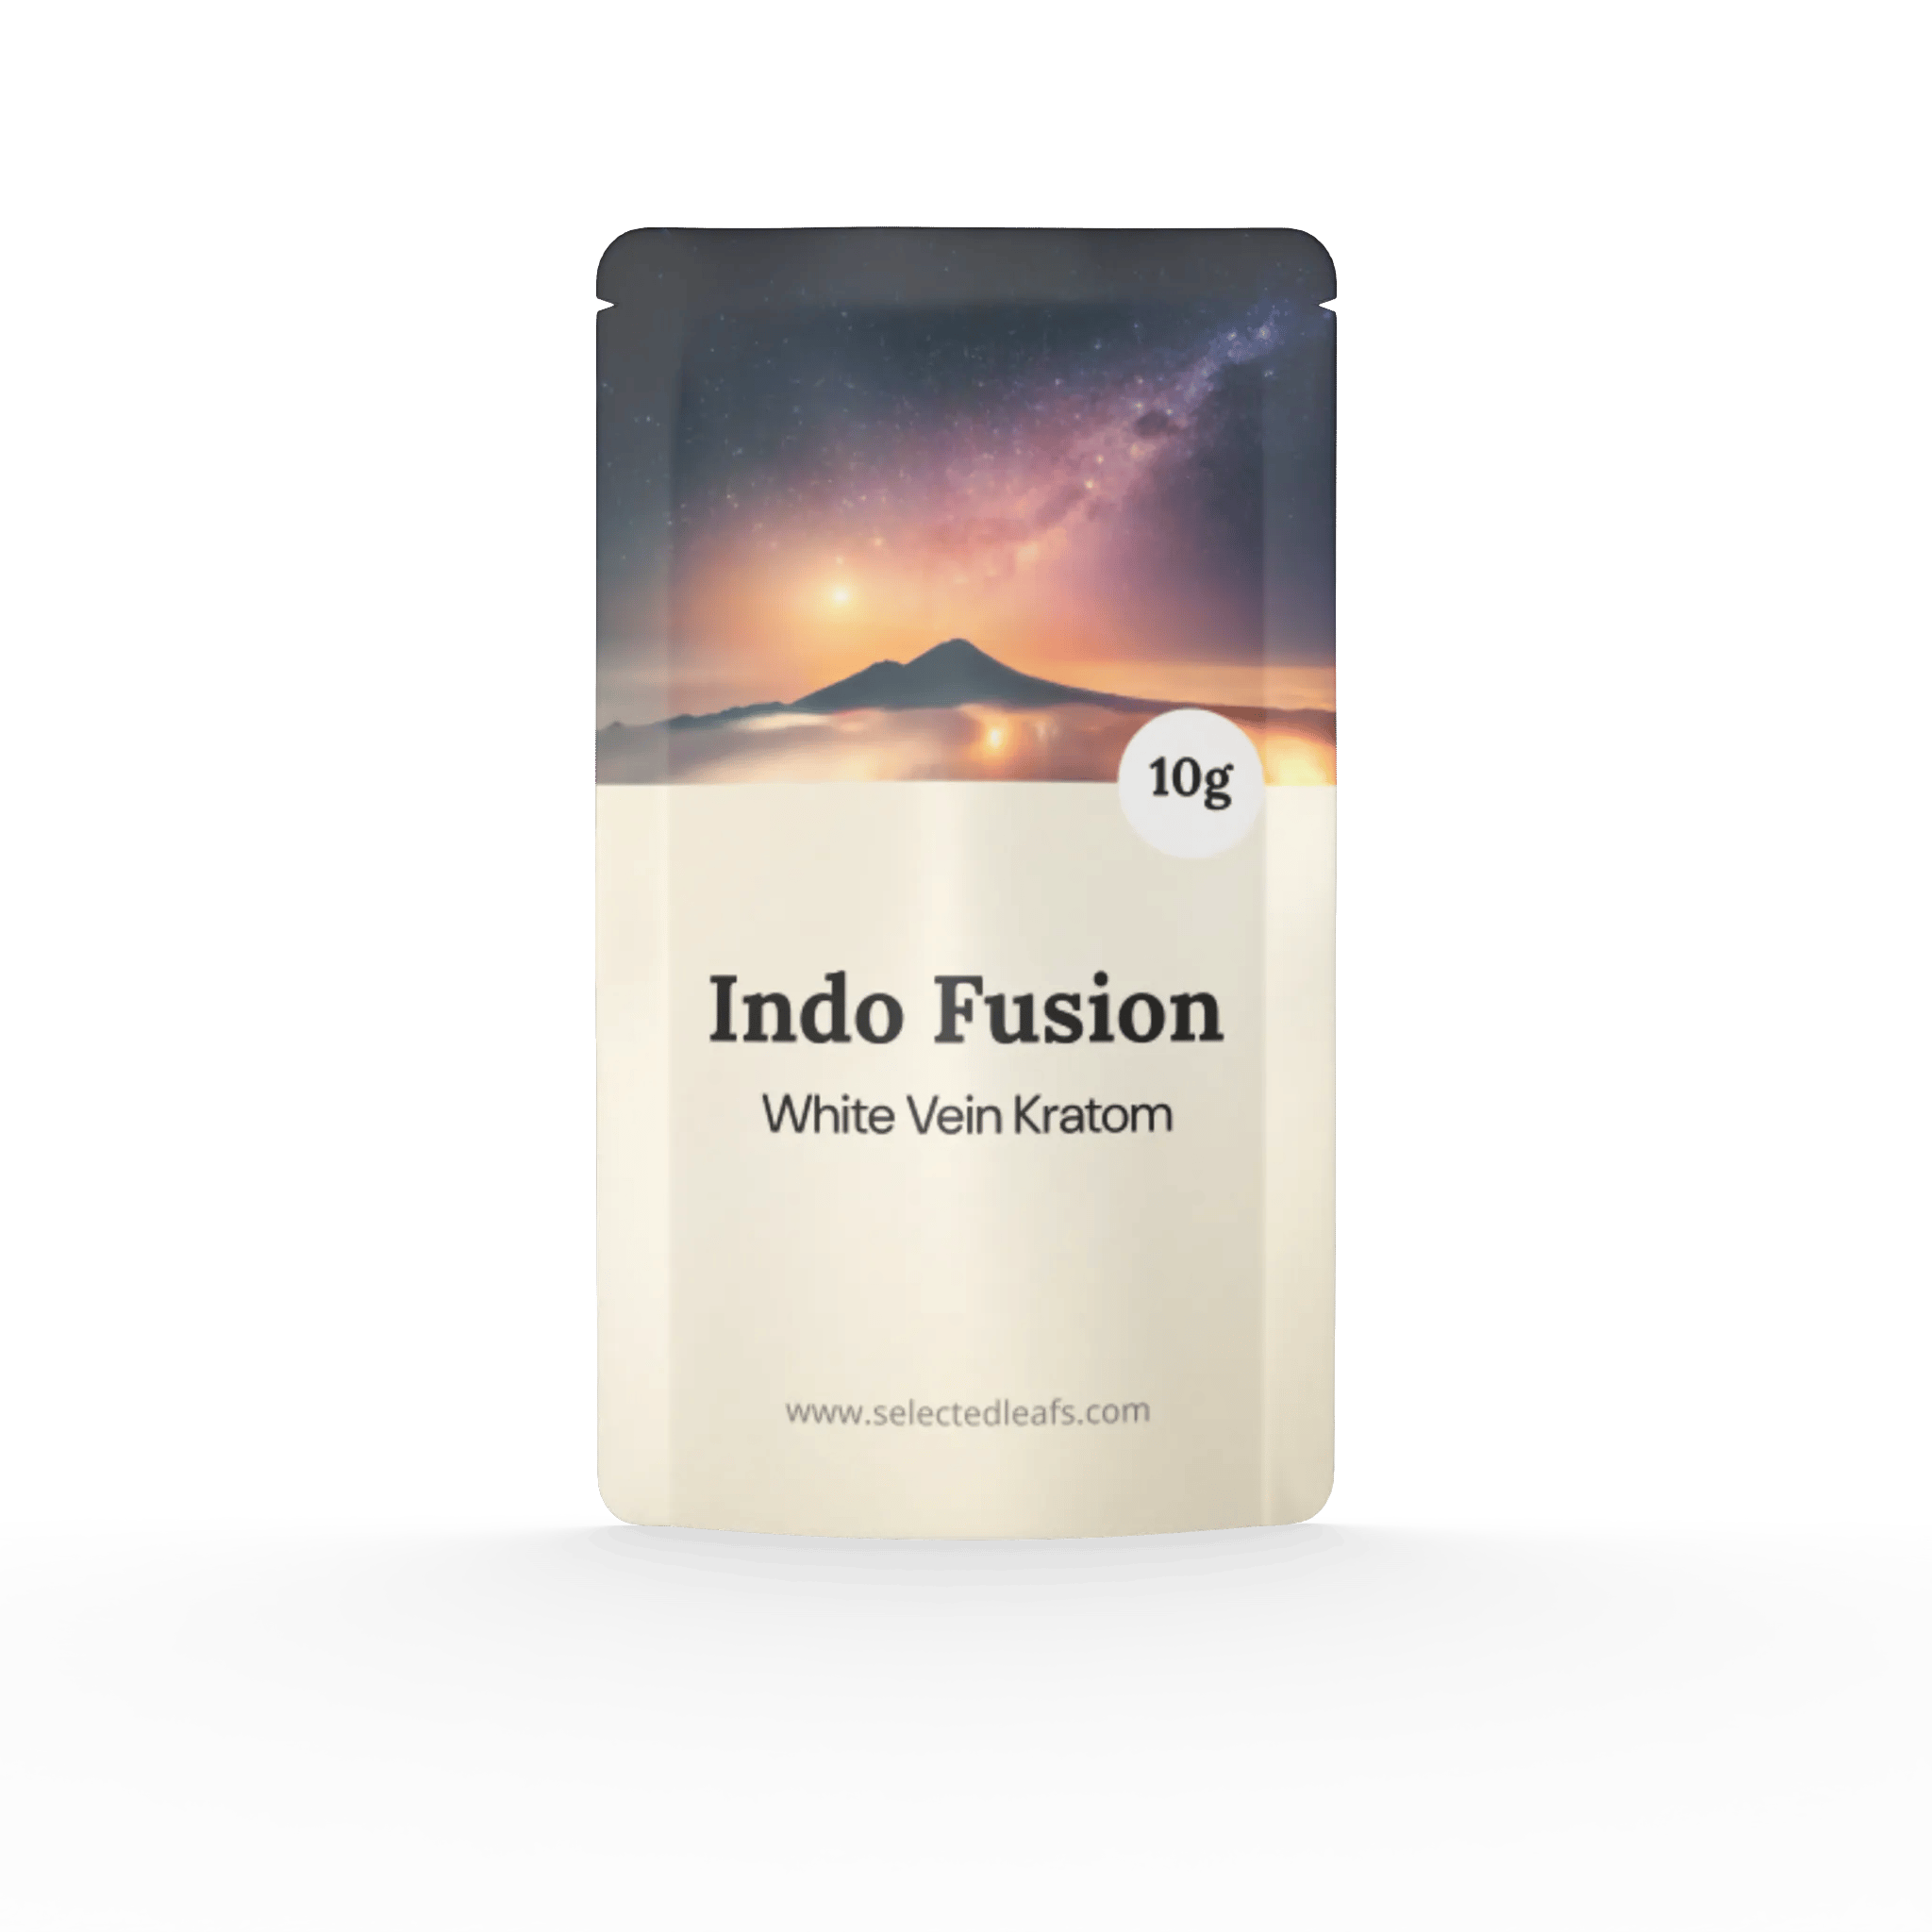 Indo Fusion